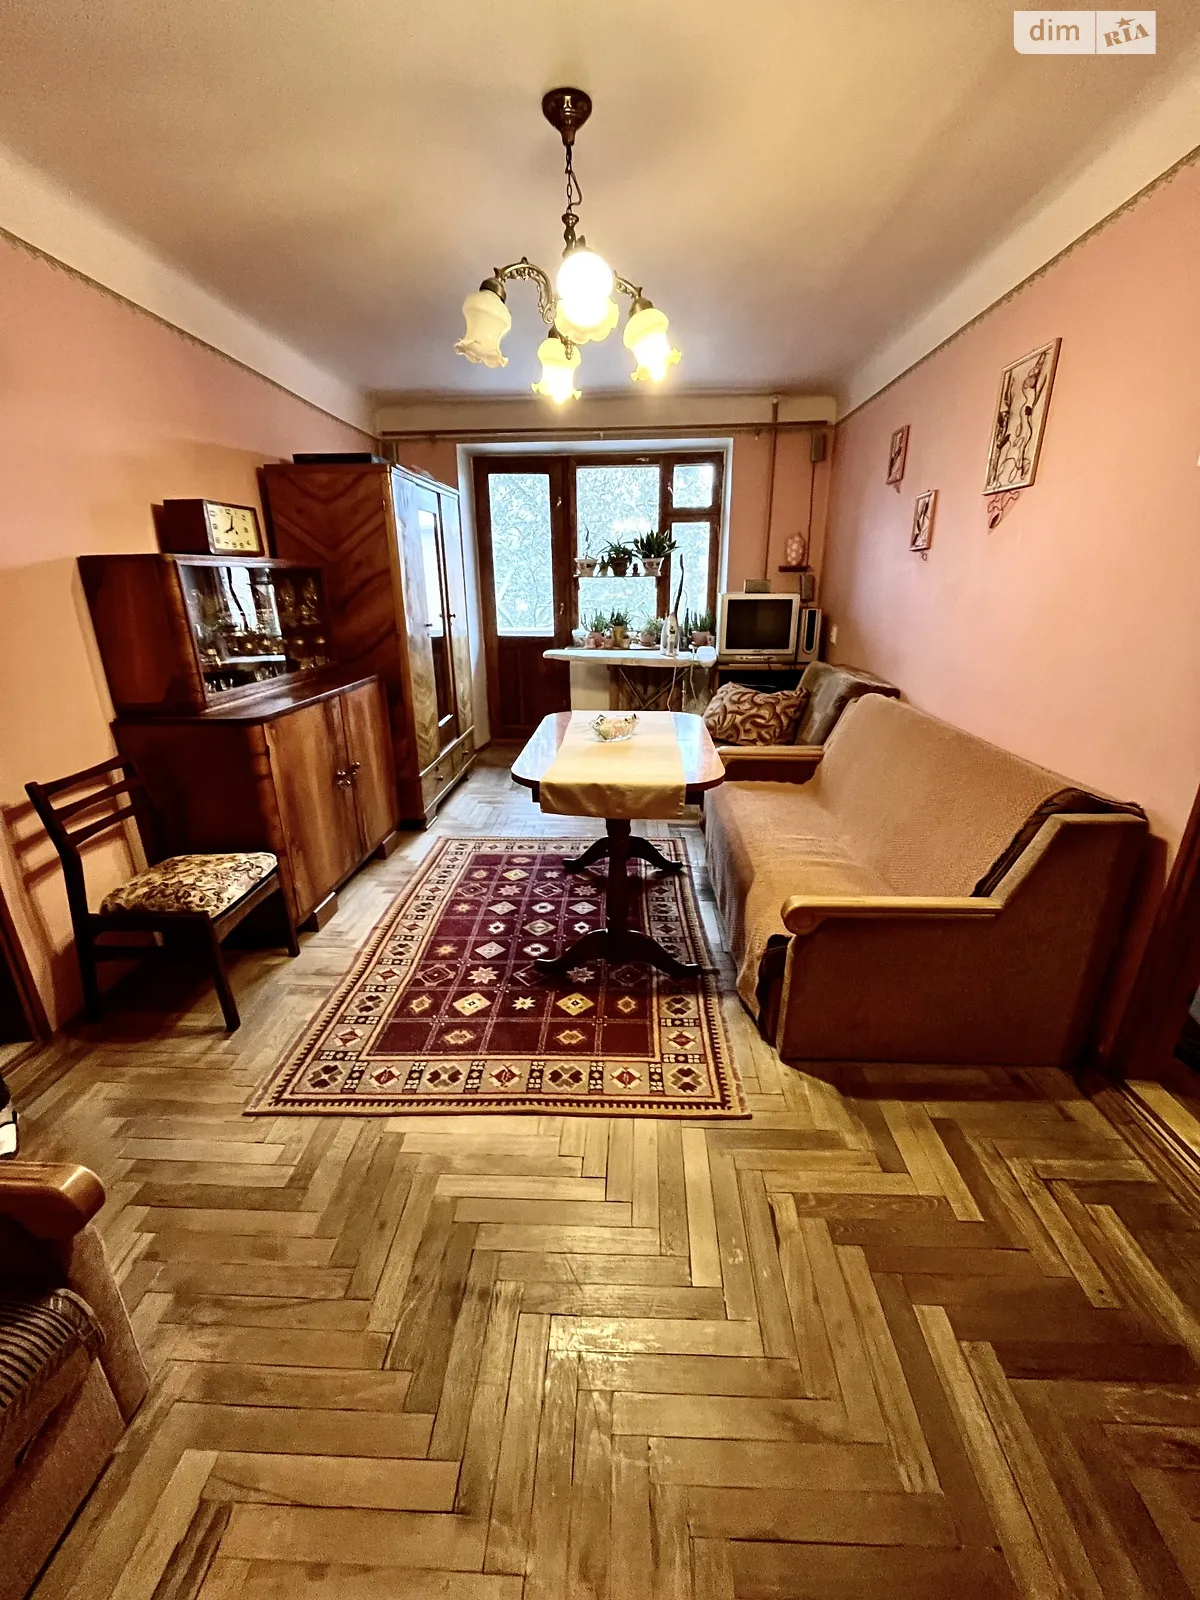 Сдается в аренду комната 44 кв. м в Ровно - фото 3